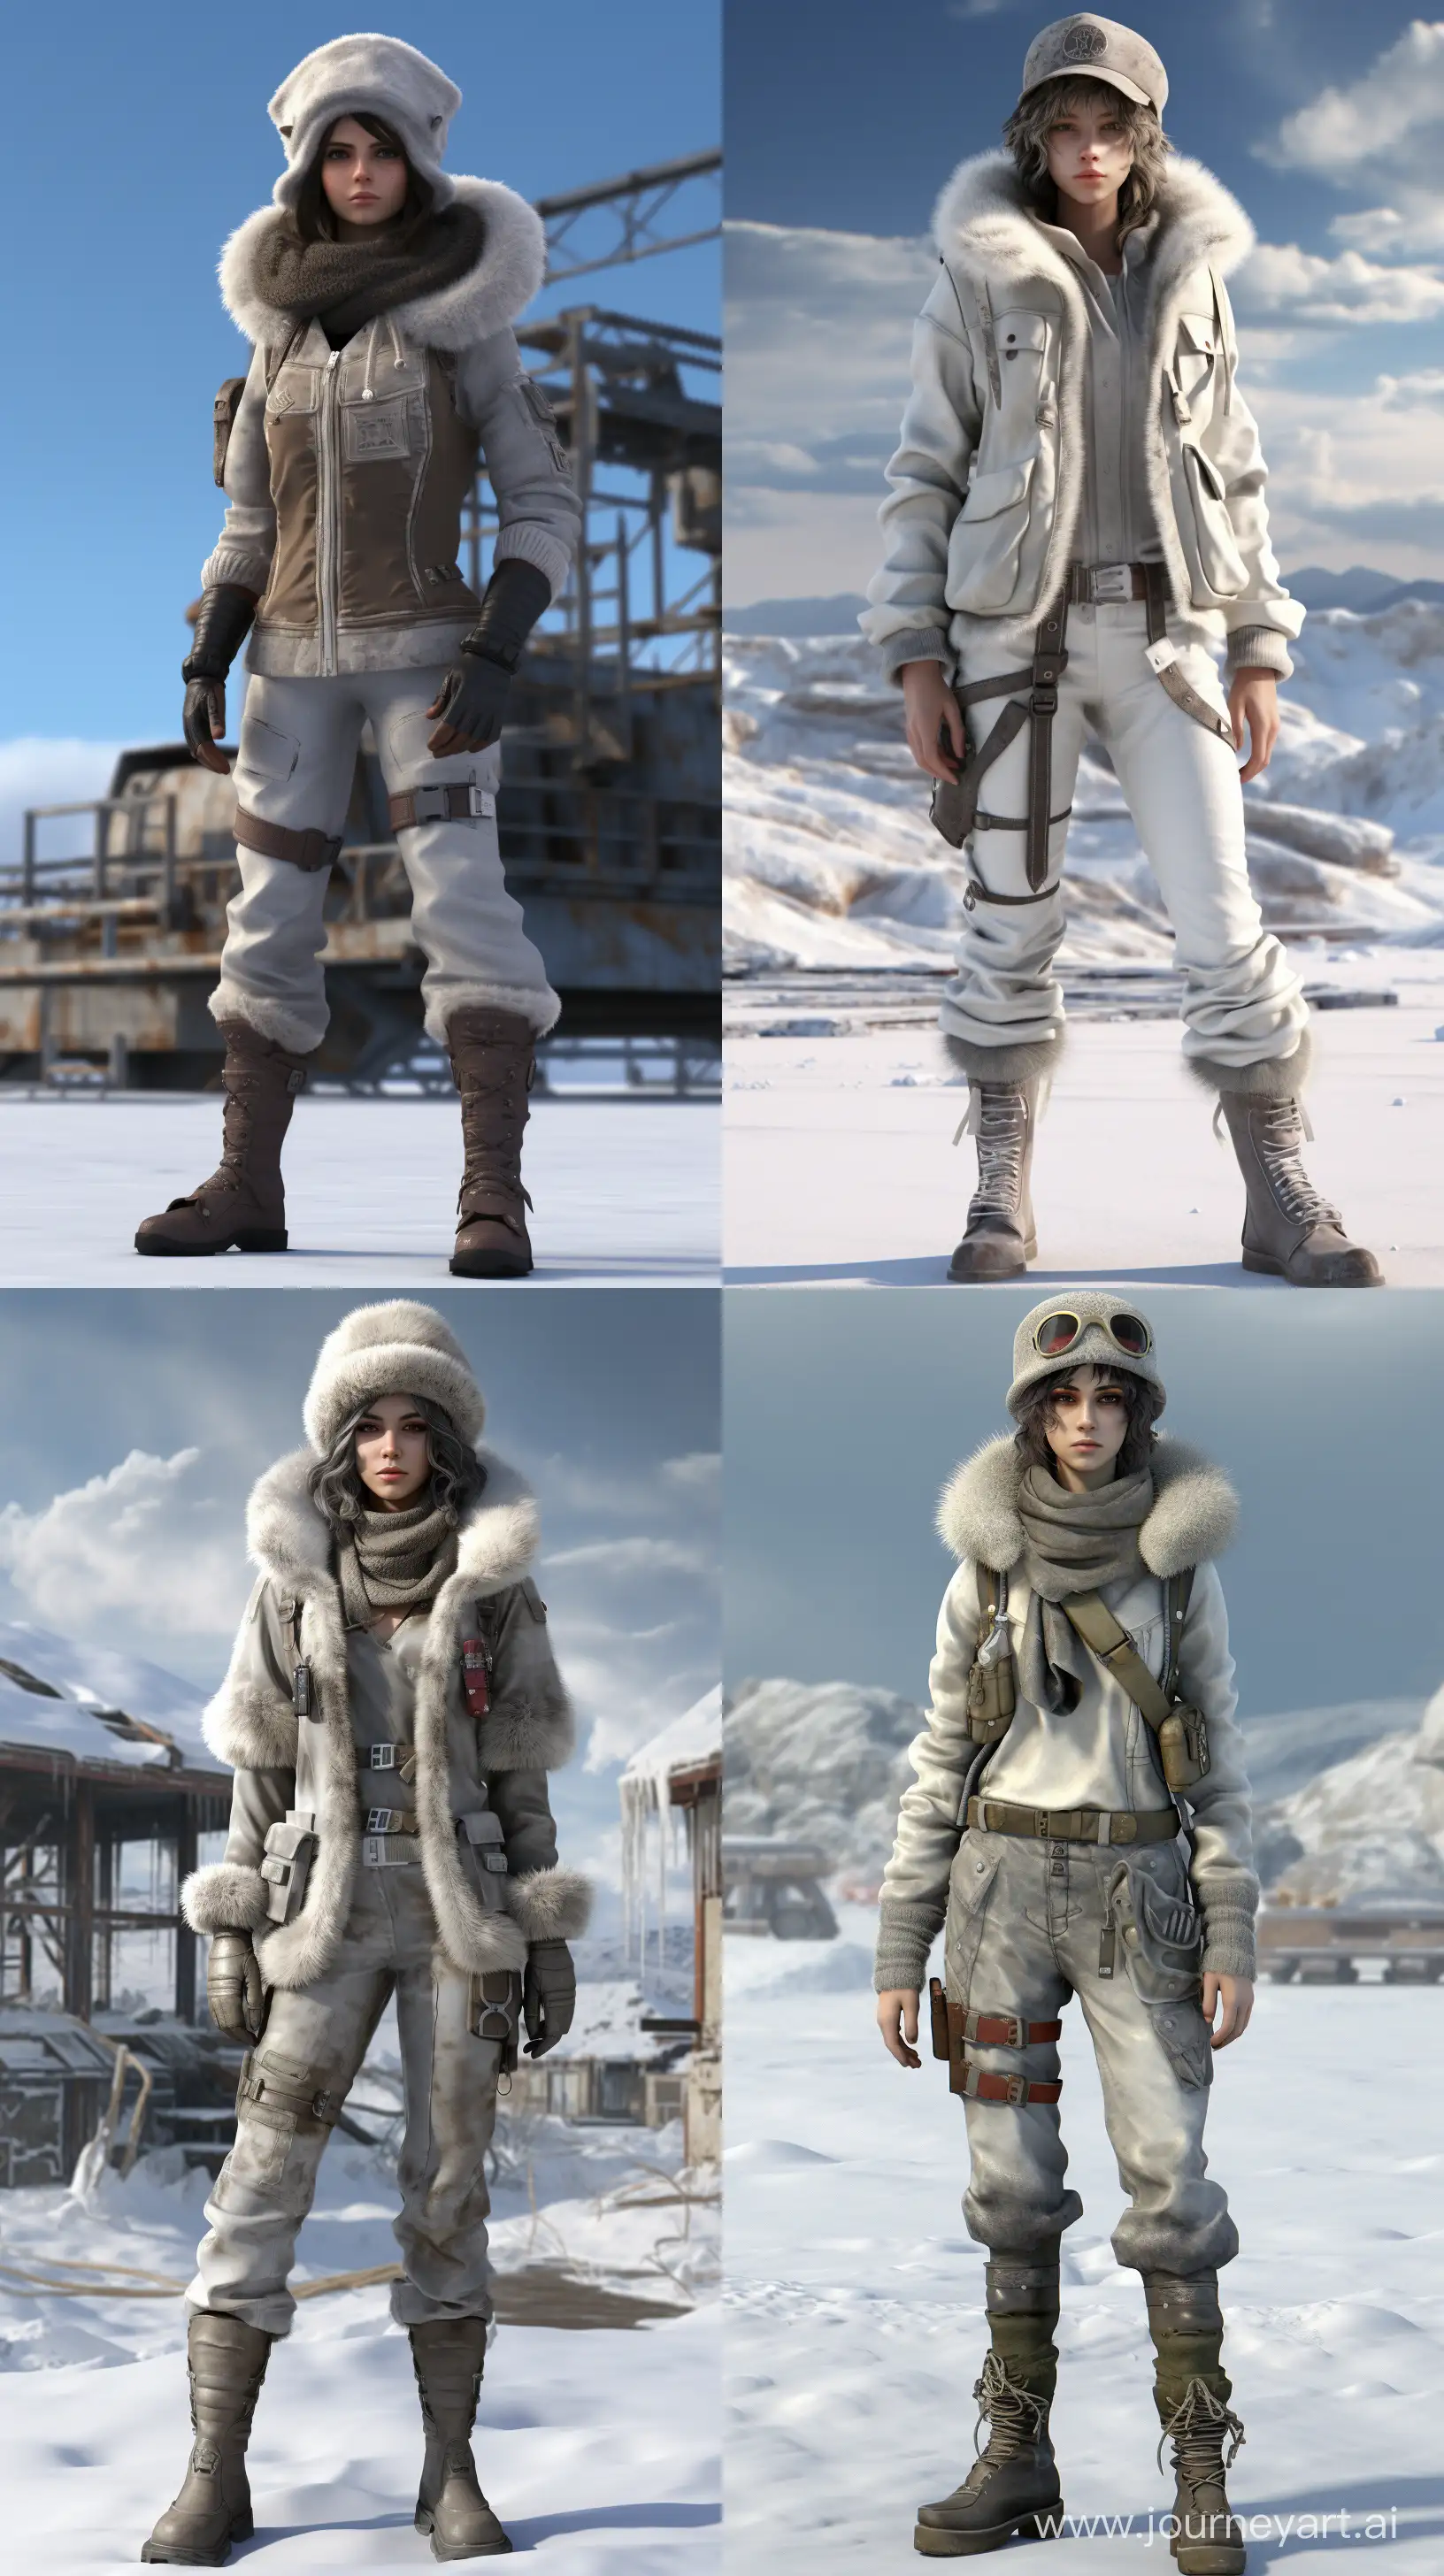 PostApocalyptic-Tomboy-Woman-in-Communist-Snow-Camouflage-Uniform